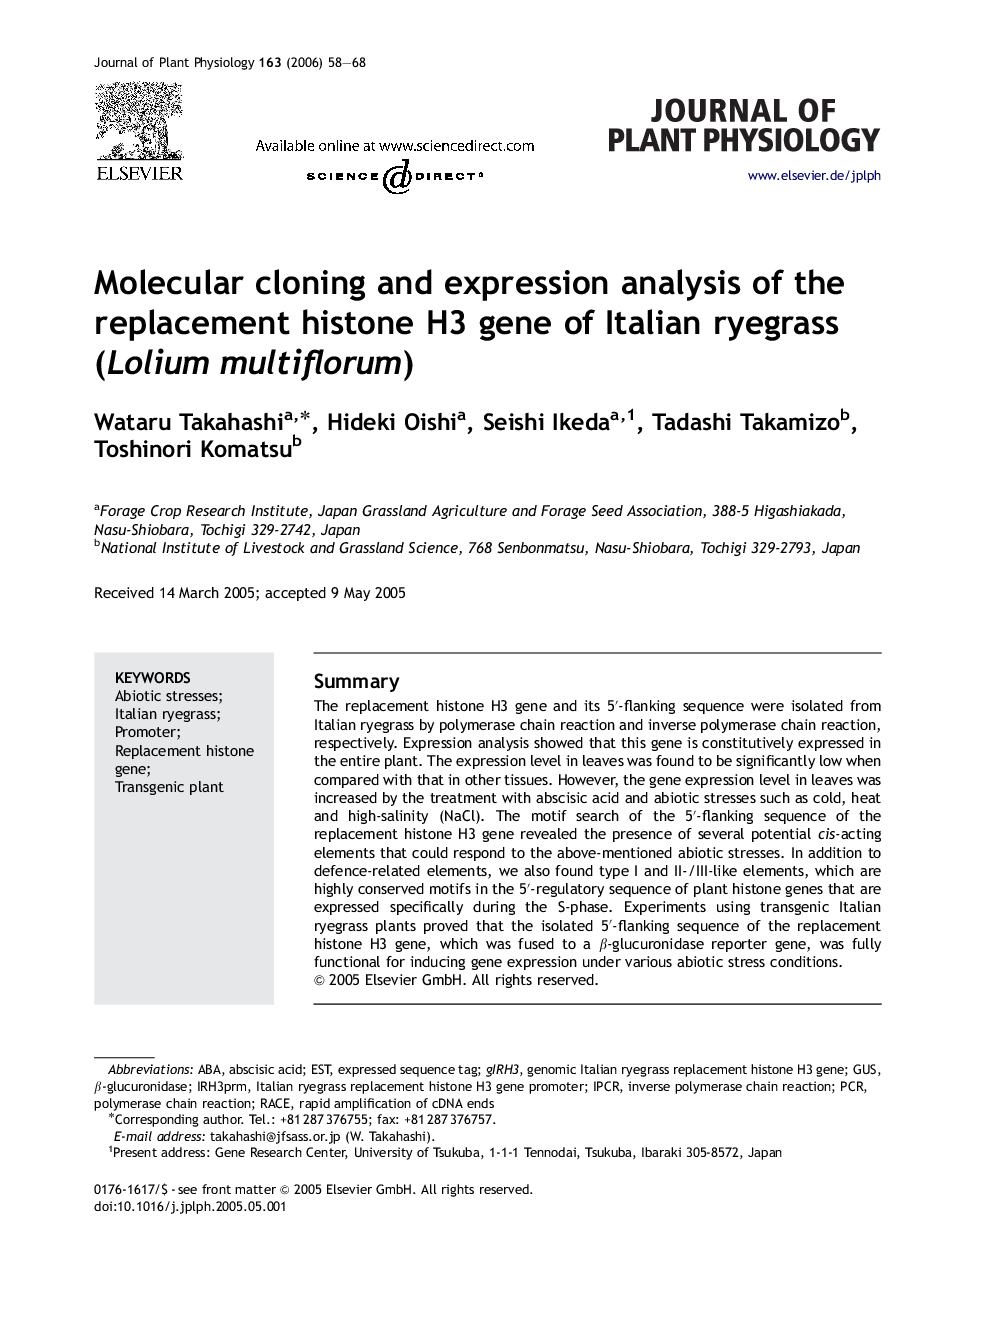 Molecular cloning and expression analysis of the replacement histone H3 gene of Italian ryegrass (Lolium multiflorum)